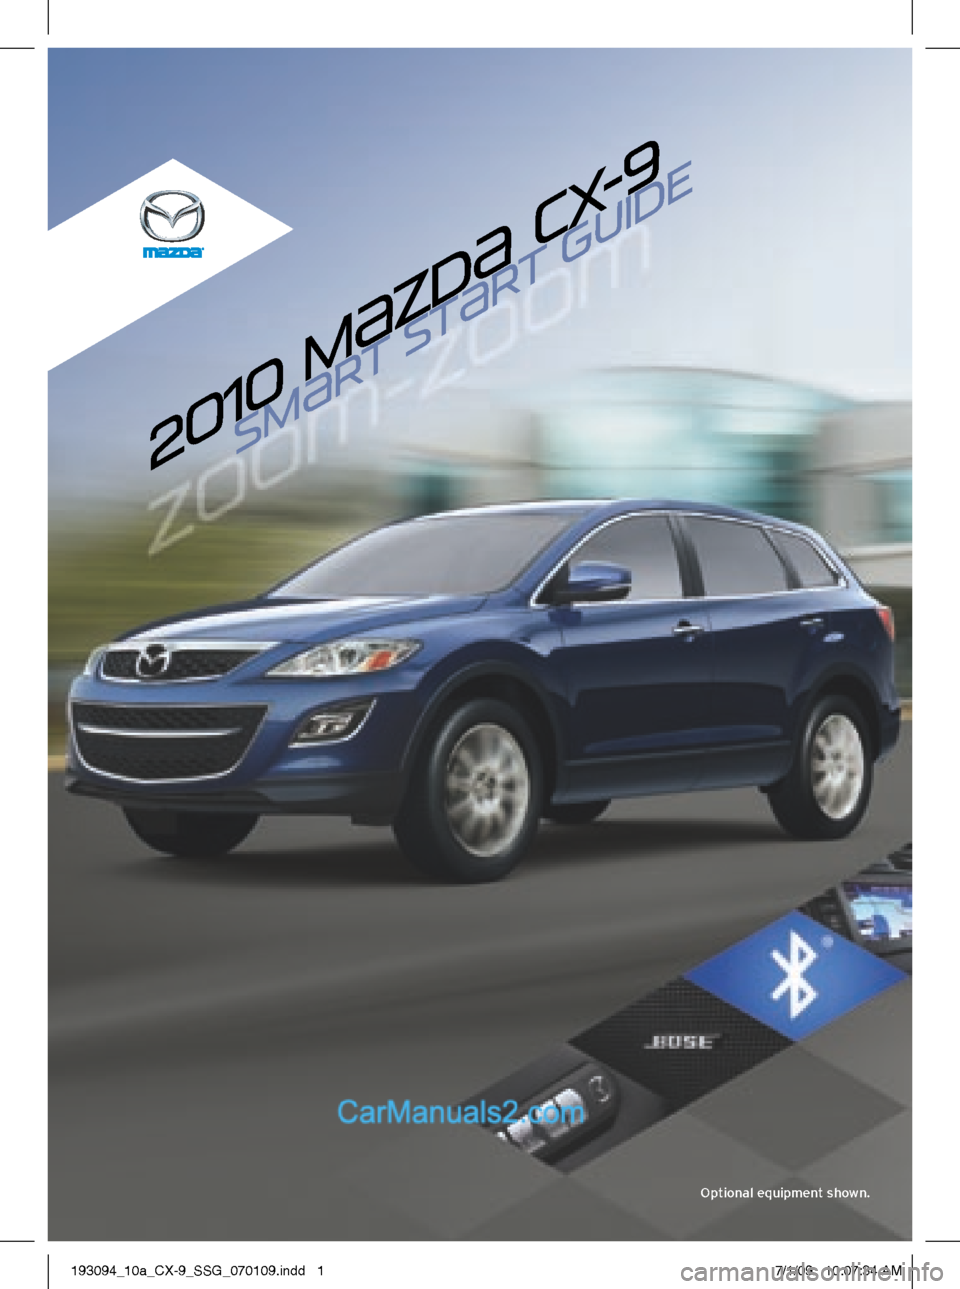 MAZDA MODEL CX-9 2010  Smart Start Guide (in English) 